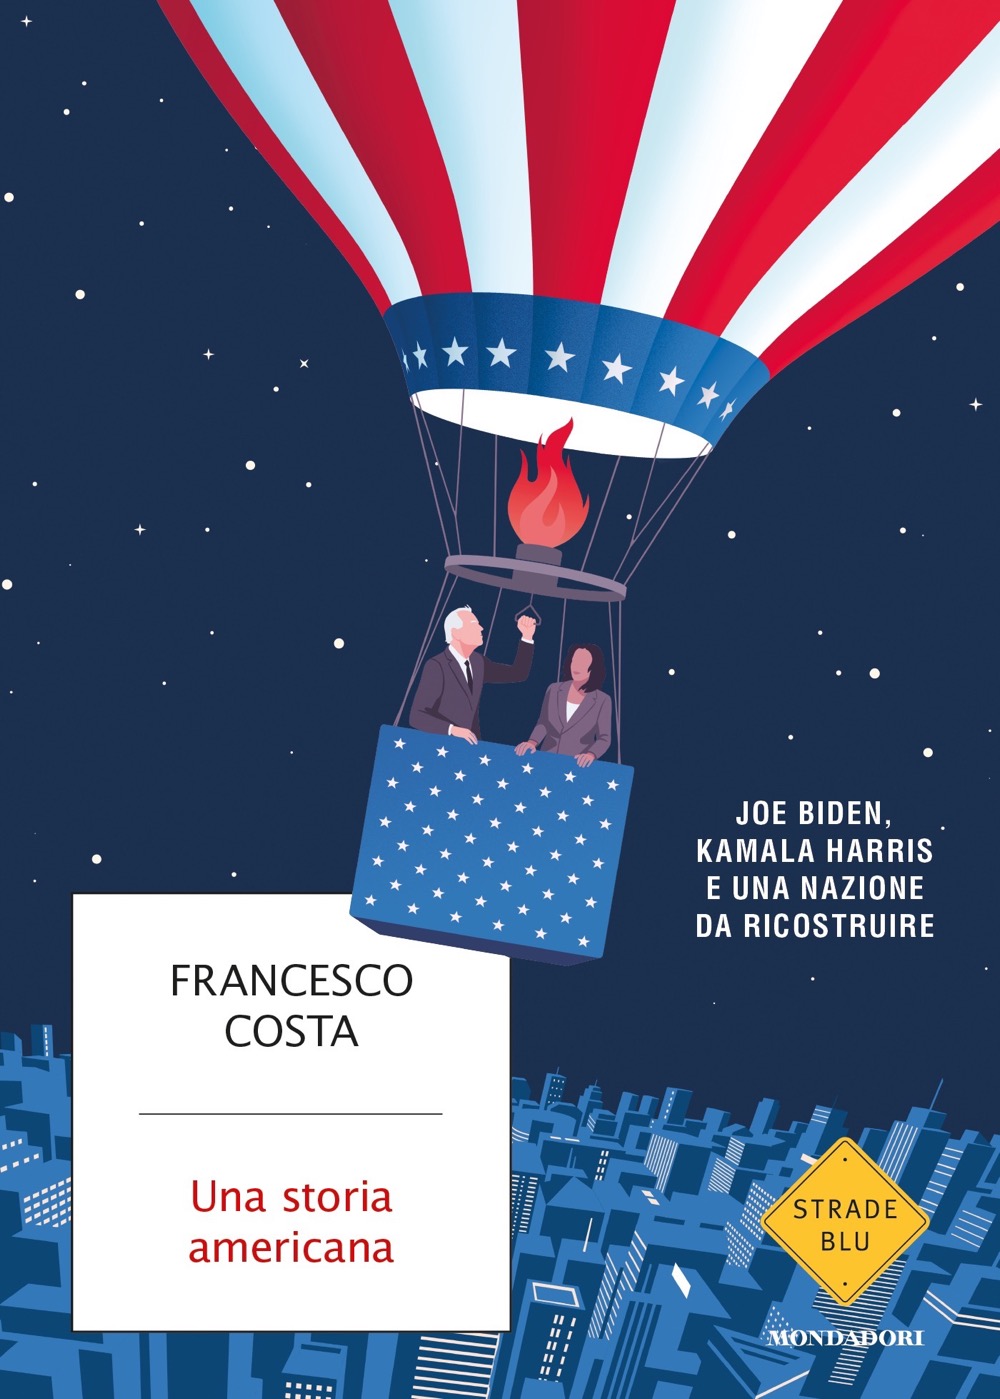 Interviste: Francesco Costa - Una storia americana (16-02-21)